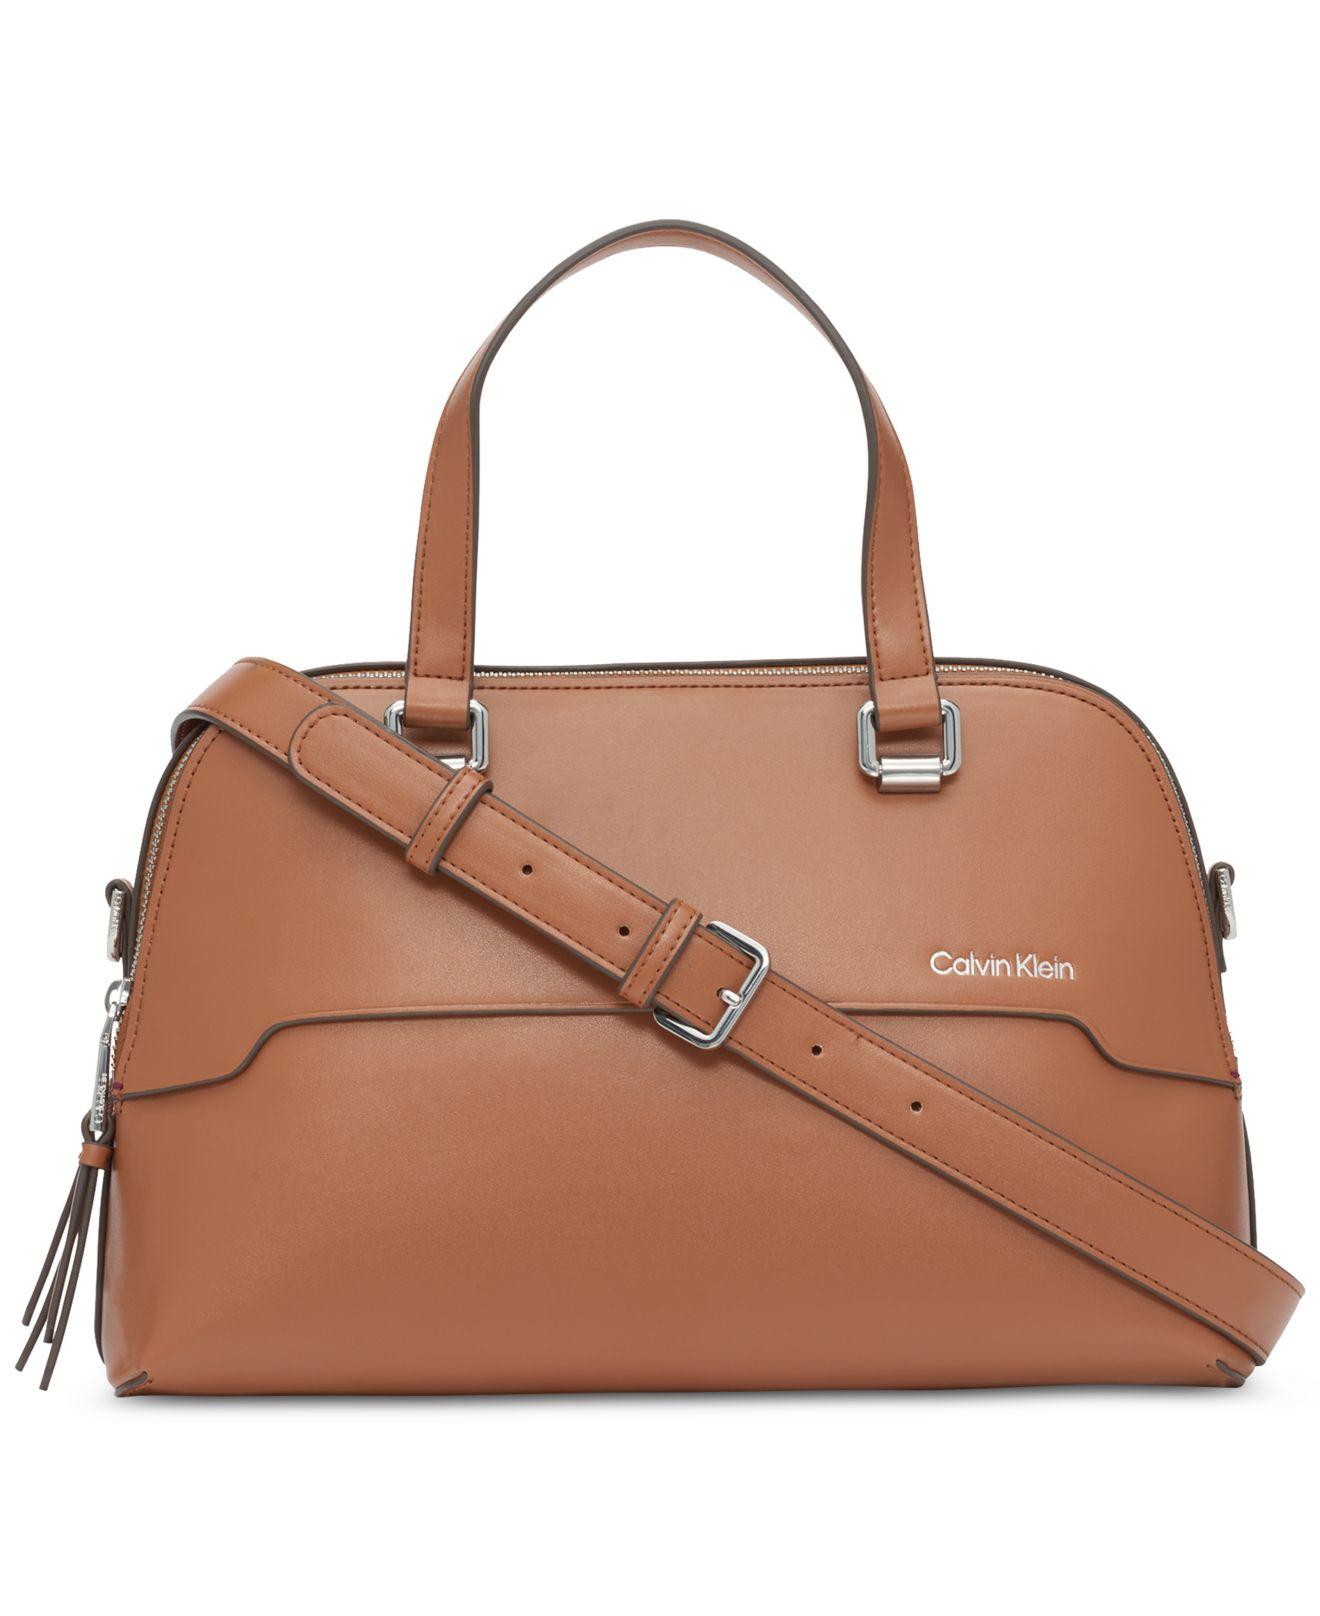 Calvin Klein Jasper Top Zipper Medium Convertible Satchel in Brown | Lyst